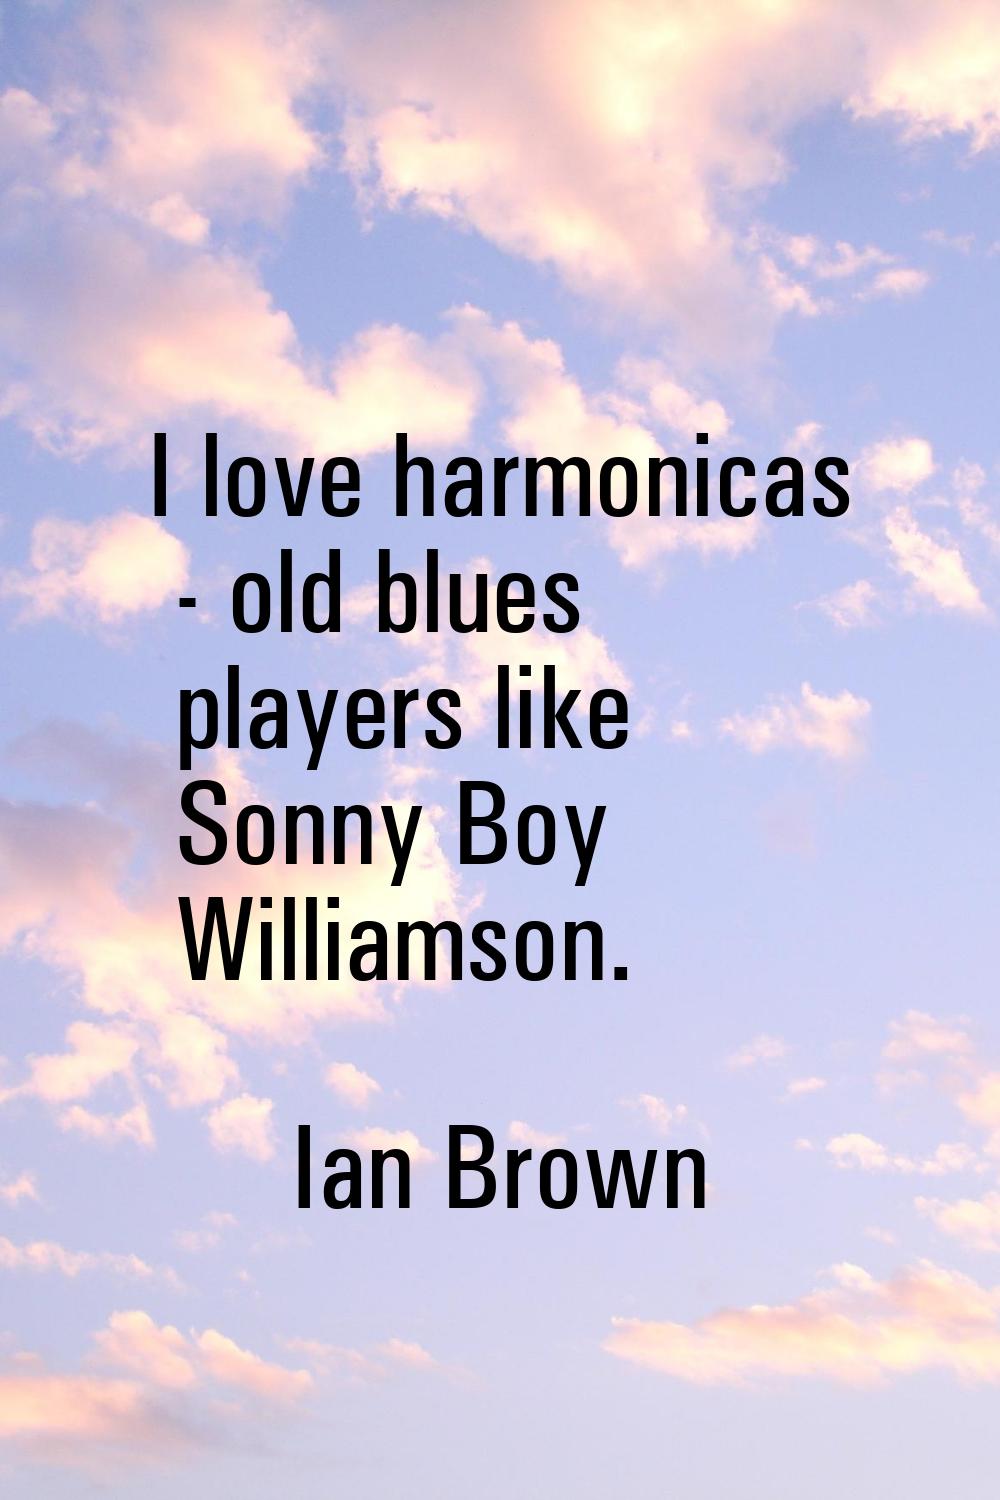 I love harmonicas - old blues players like Sonny Boy Williamson.